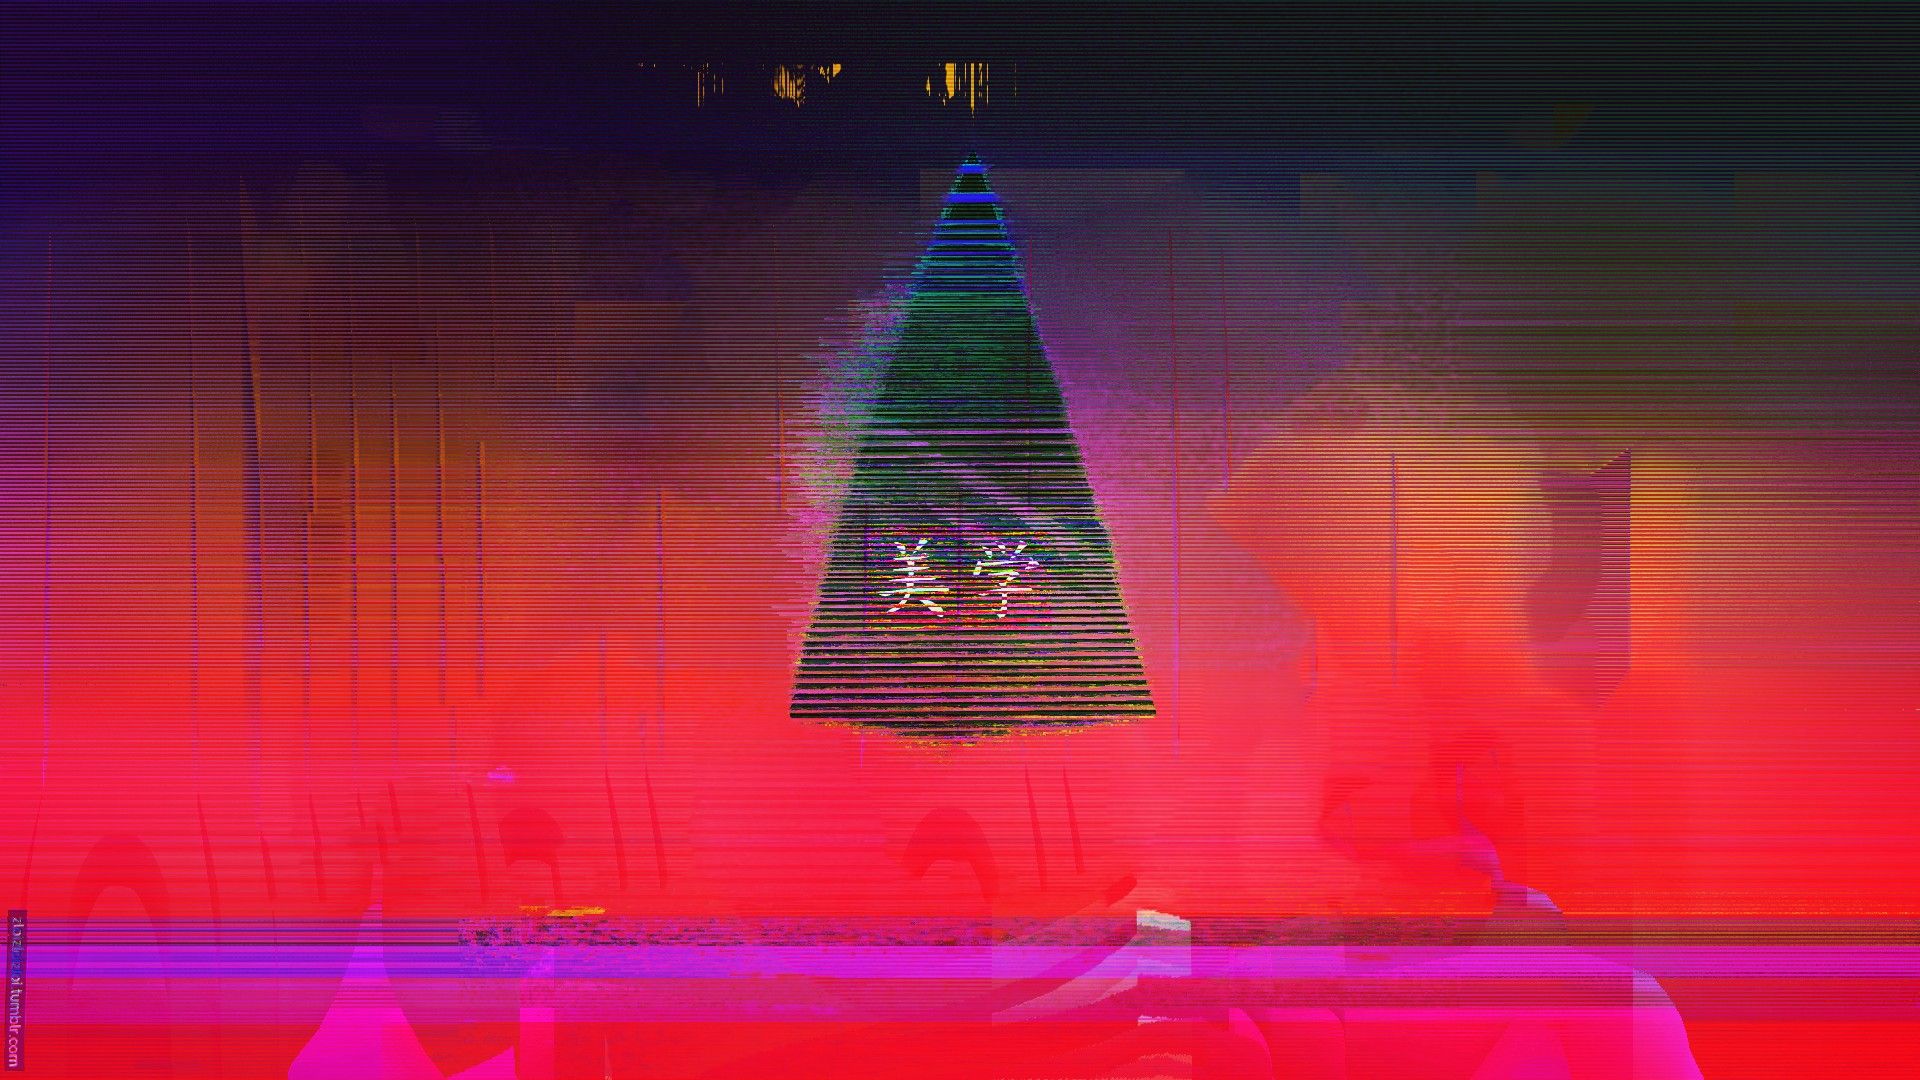 1920x1080 glitch art neon abstract triangle japan vaporwave wallpaper JPG 519 kB Gallery HD Wallpaper